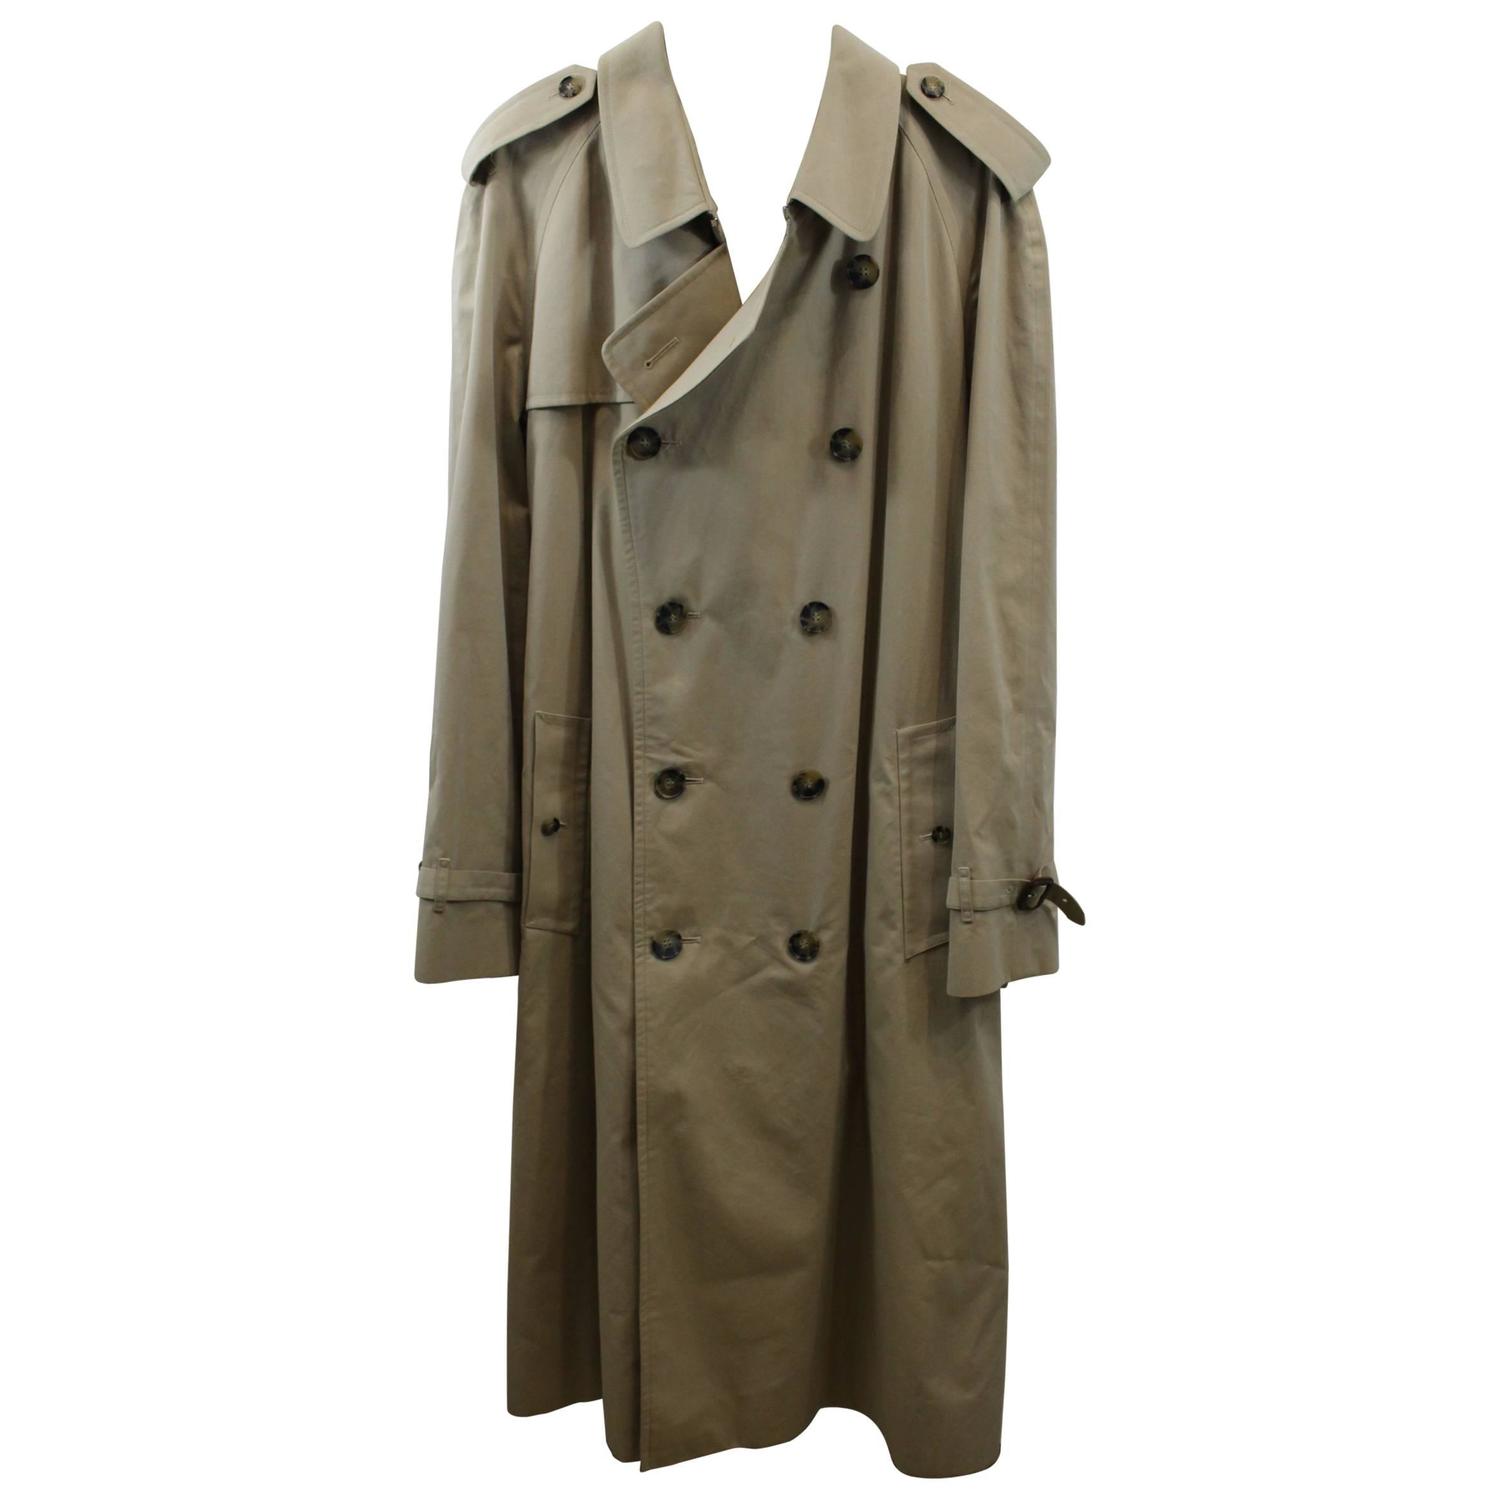 Aliexpress.com : Buy Custom Made Trench Coat Men, Winter